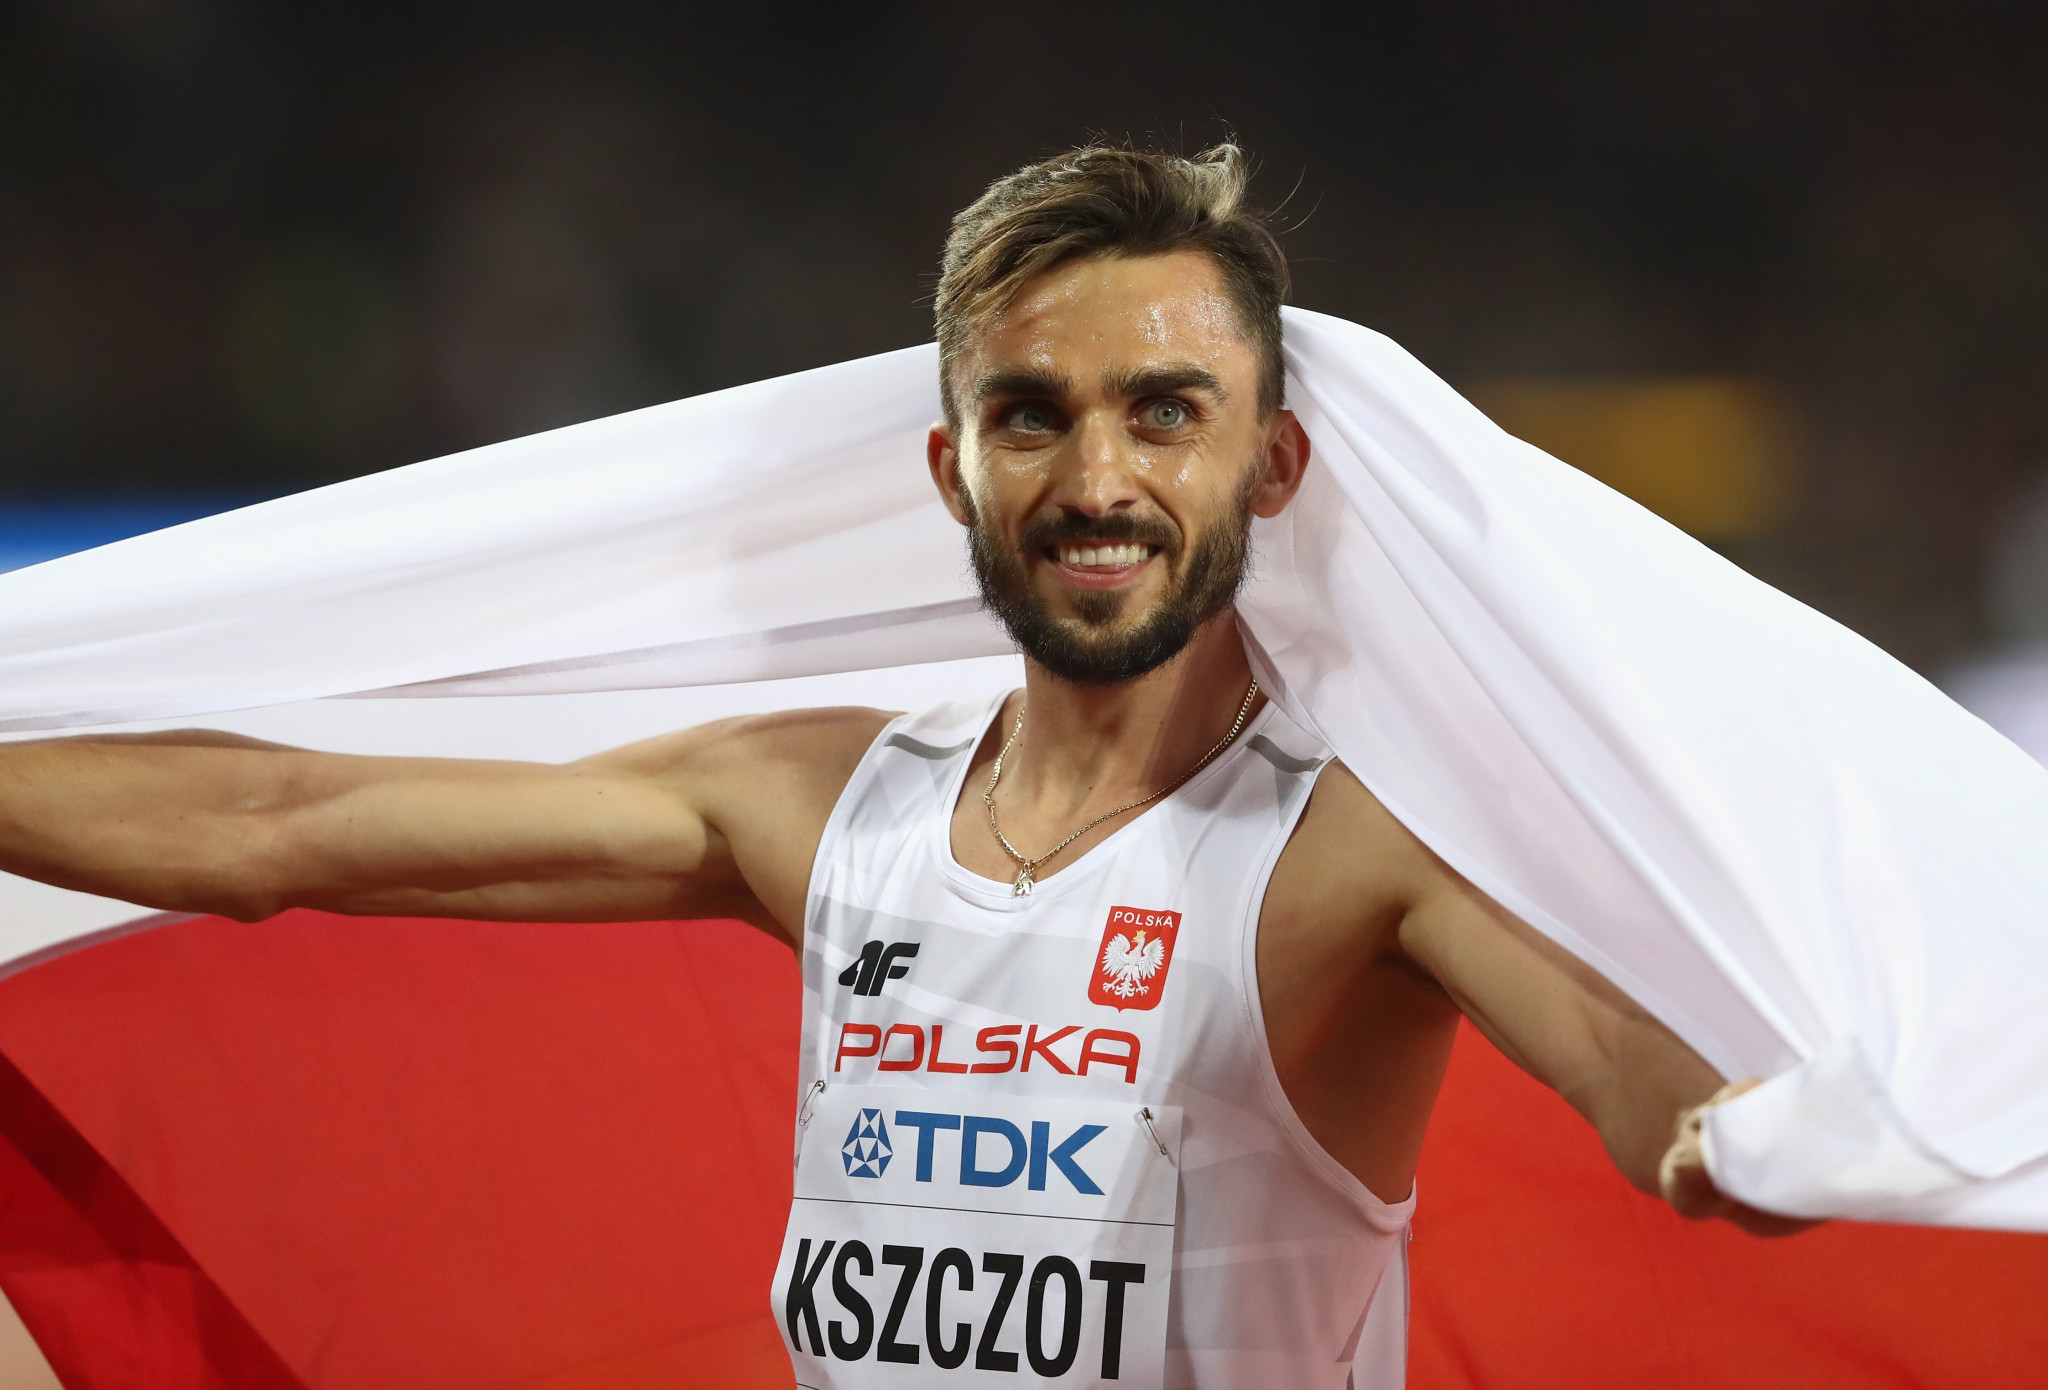 Adam Kszczot claimed the men's 800m title in Torun ©Getty Images